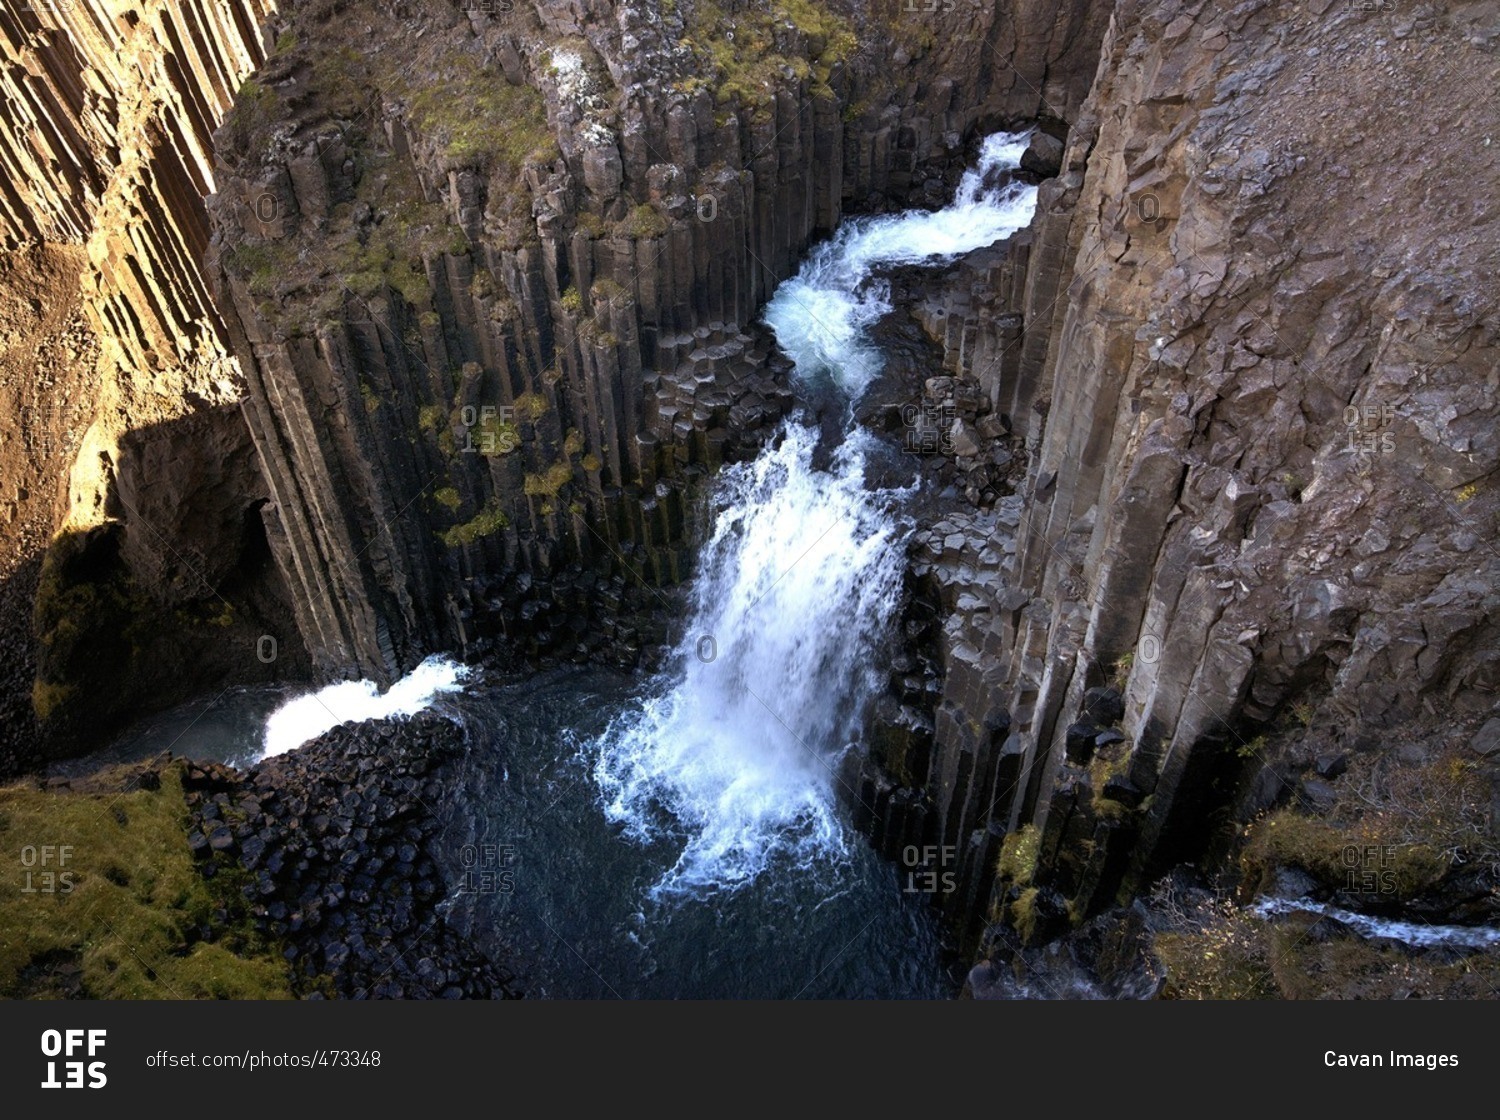 High angle view of Litlanesfoss waterfall